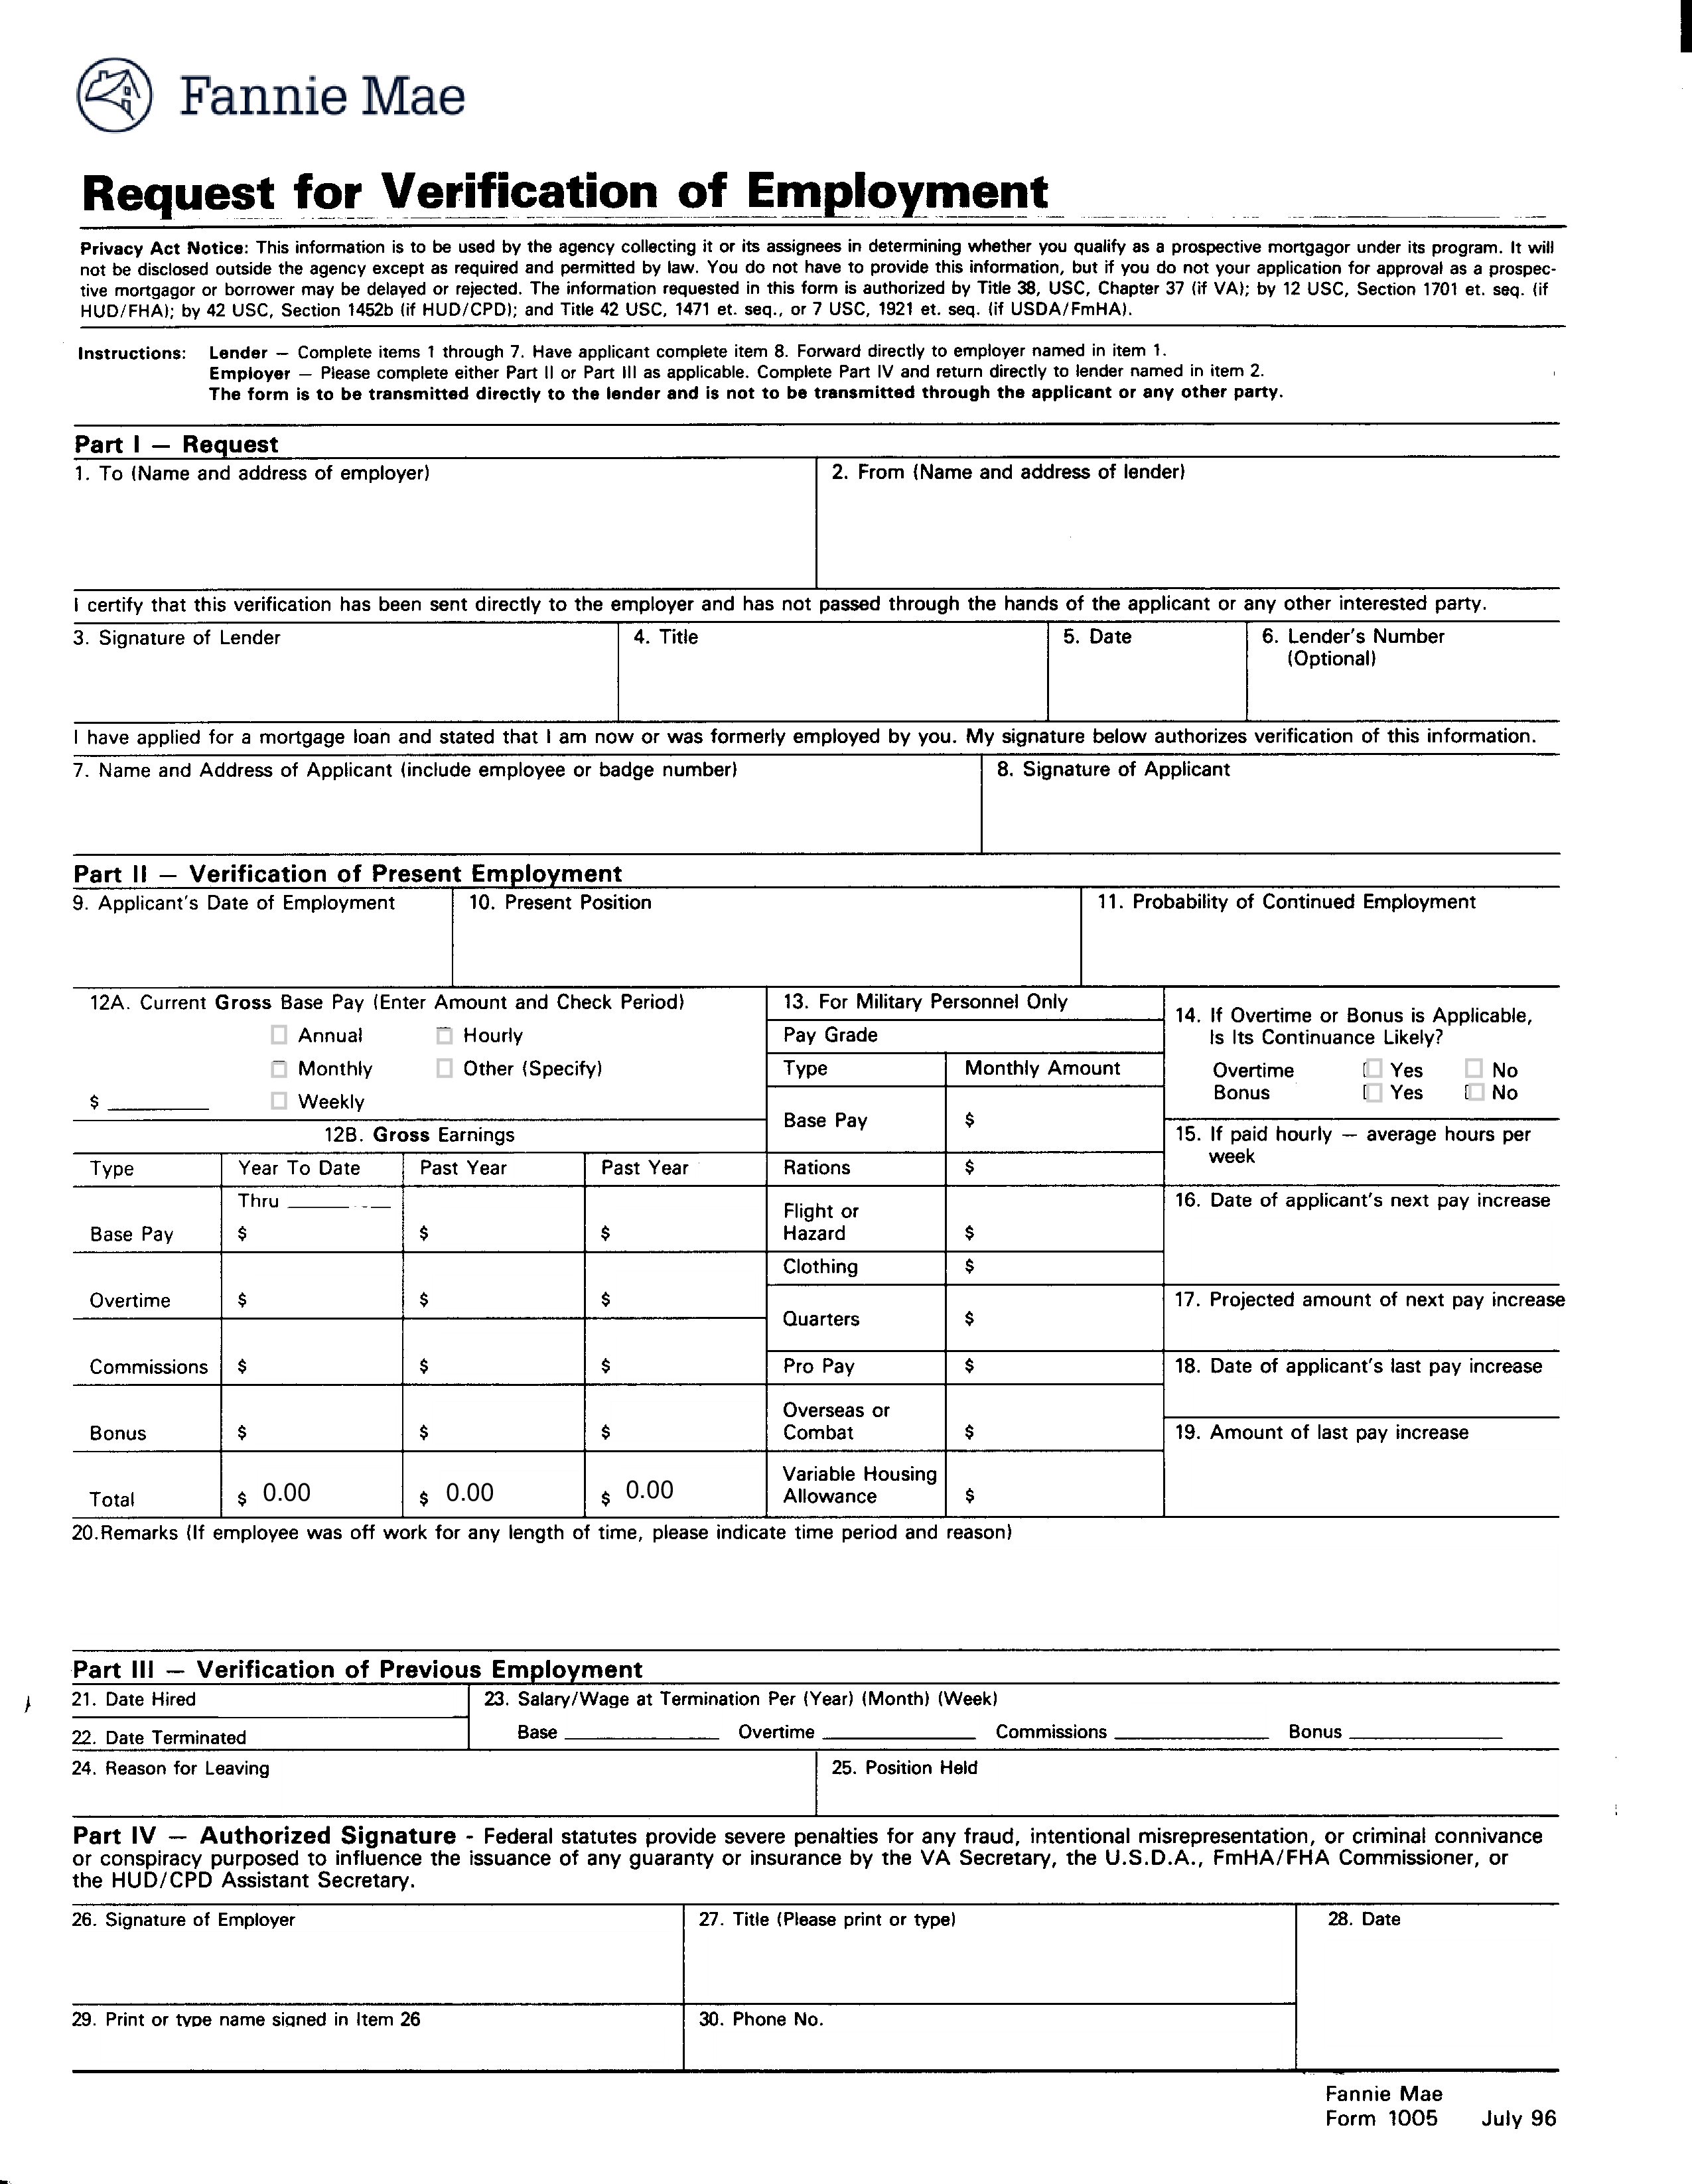 Employment Verification Request Form template 模板